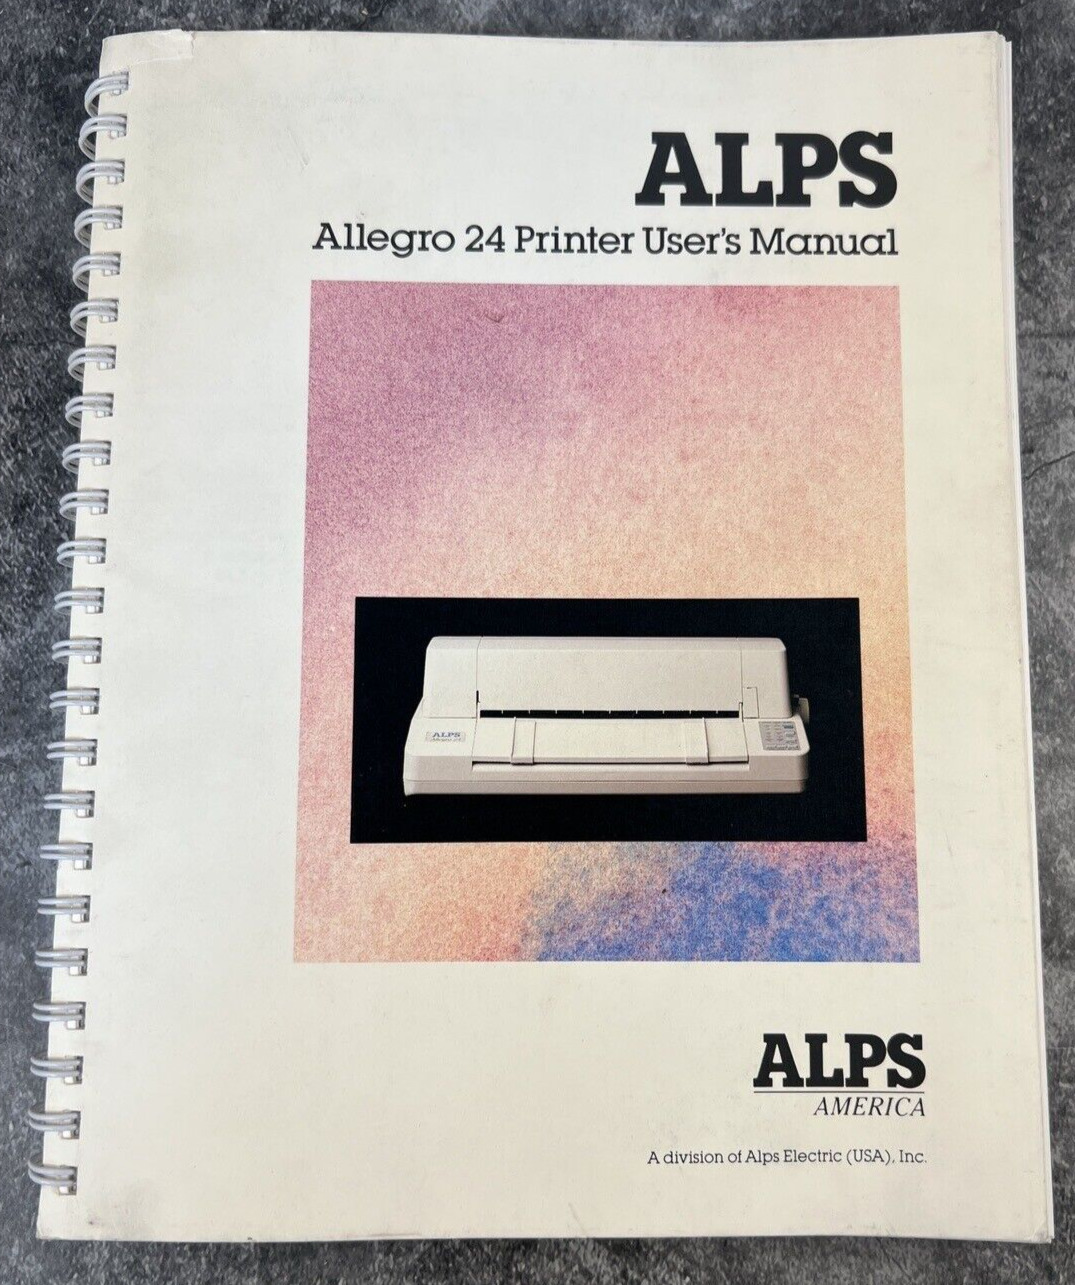 Vintage ALPS America Allegro 24 Printer User's Manual, 1988 Spiral Bound Book